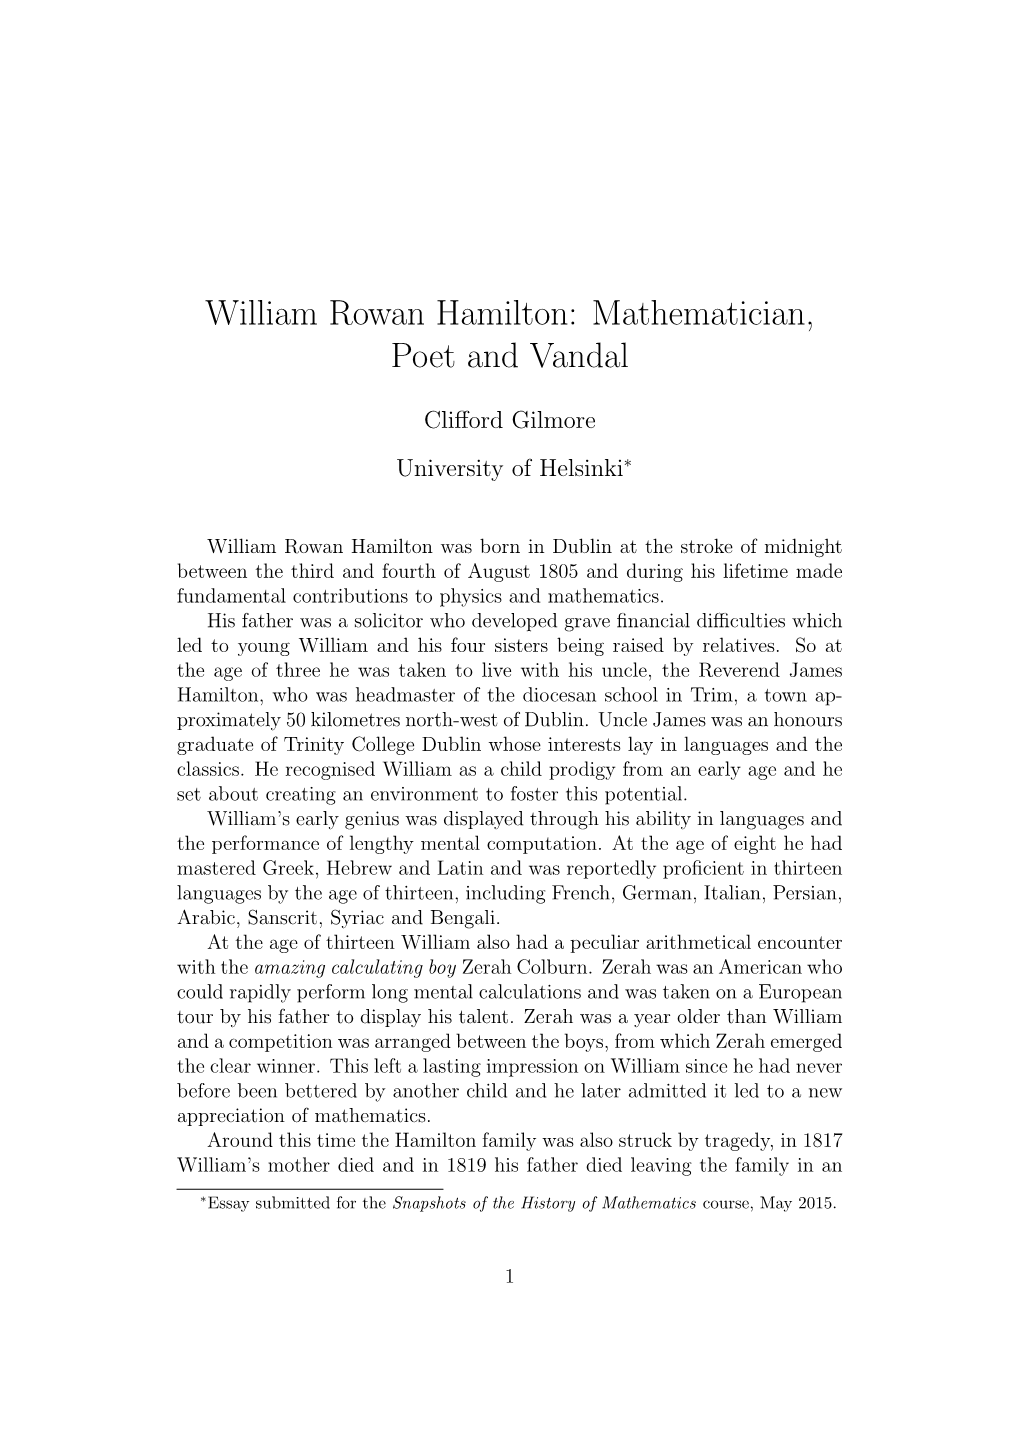 William Rowan Hamilton: Mathematician, Poet and Vandal